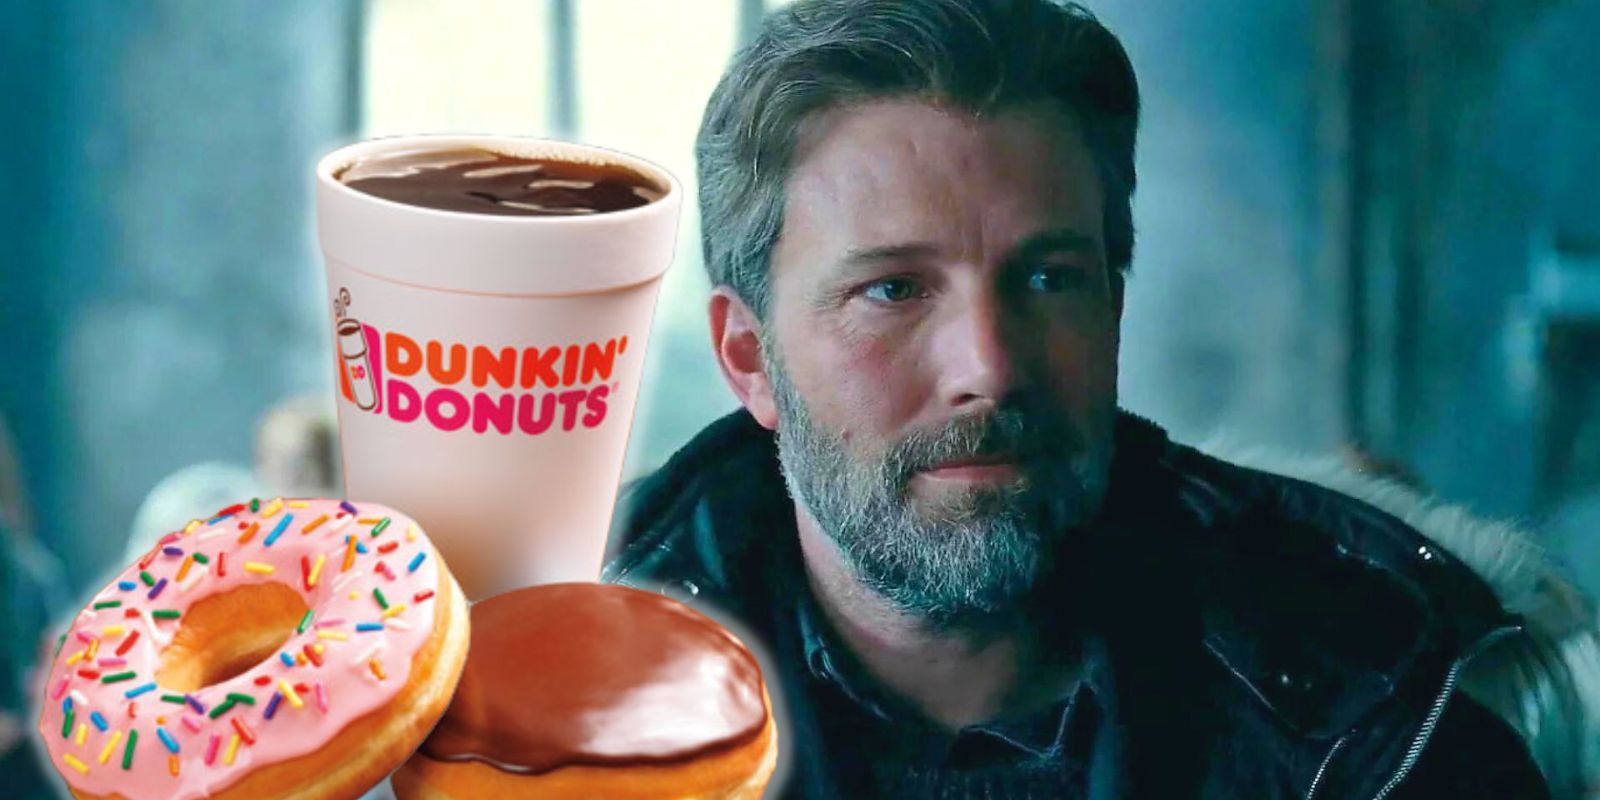 Dunkin Donuts products alongside Ben Affleck